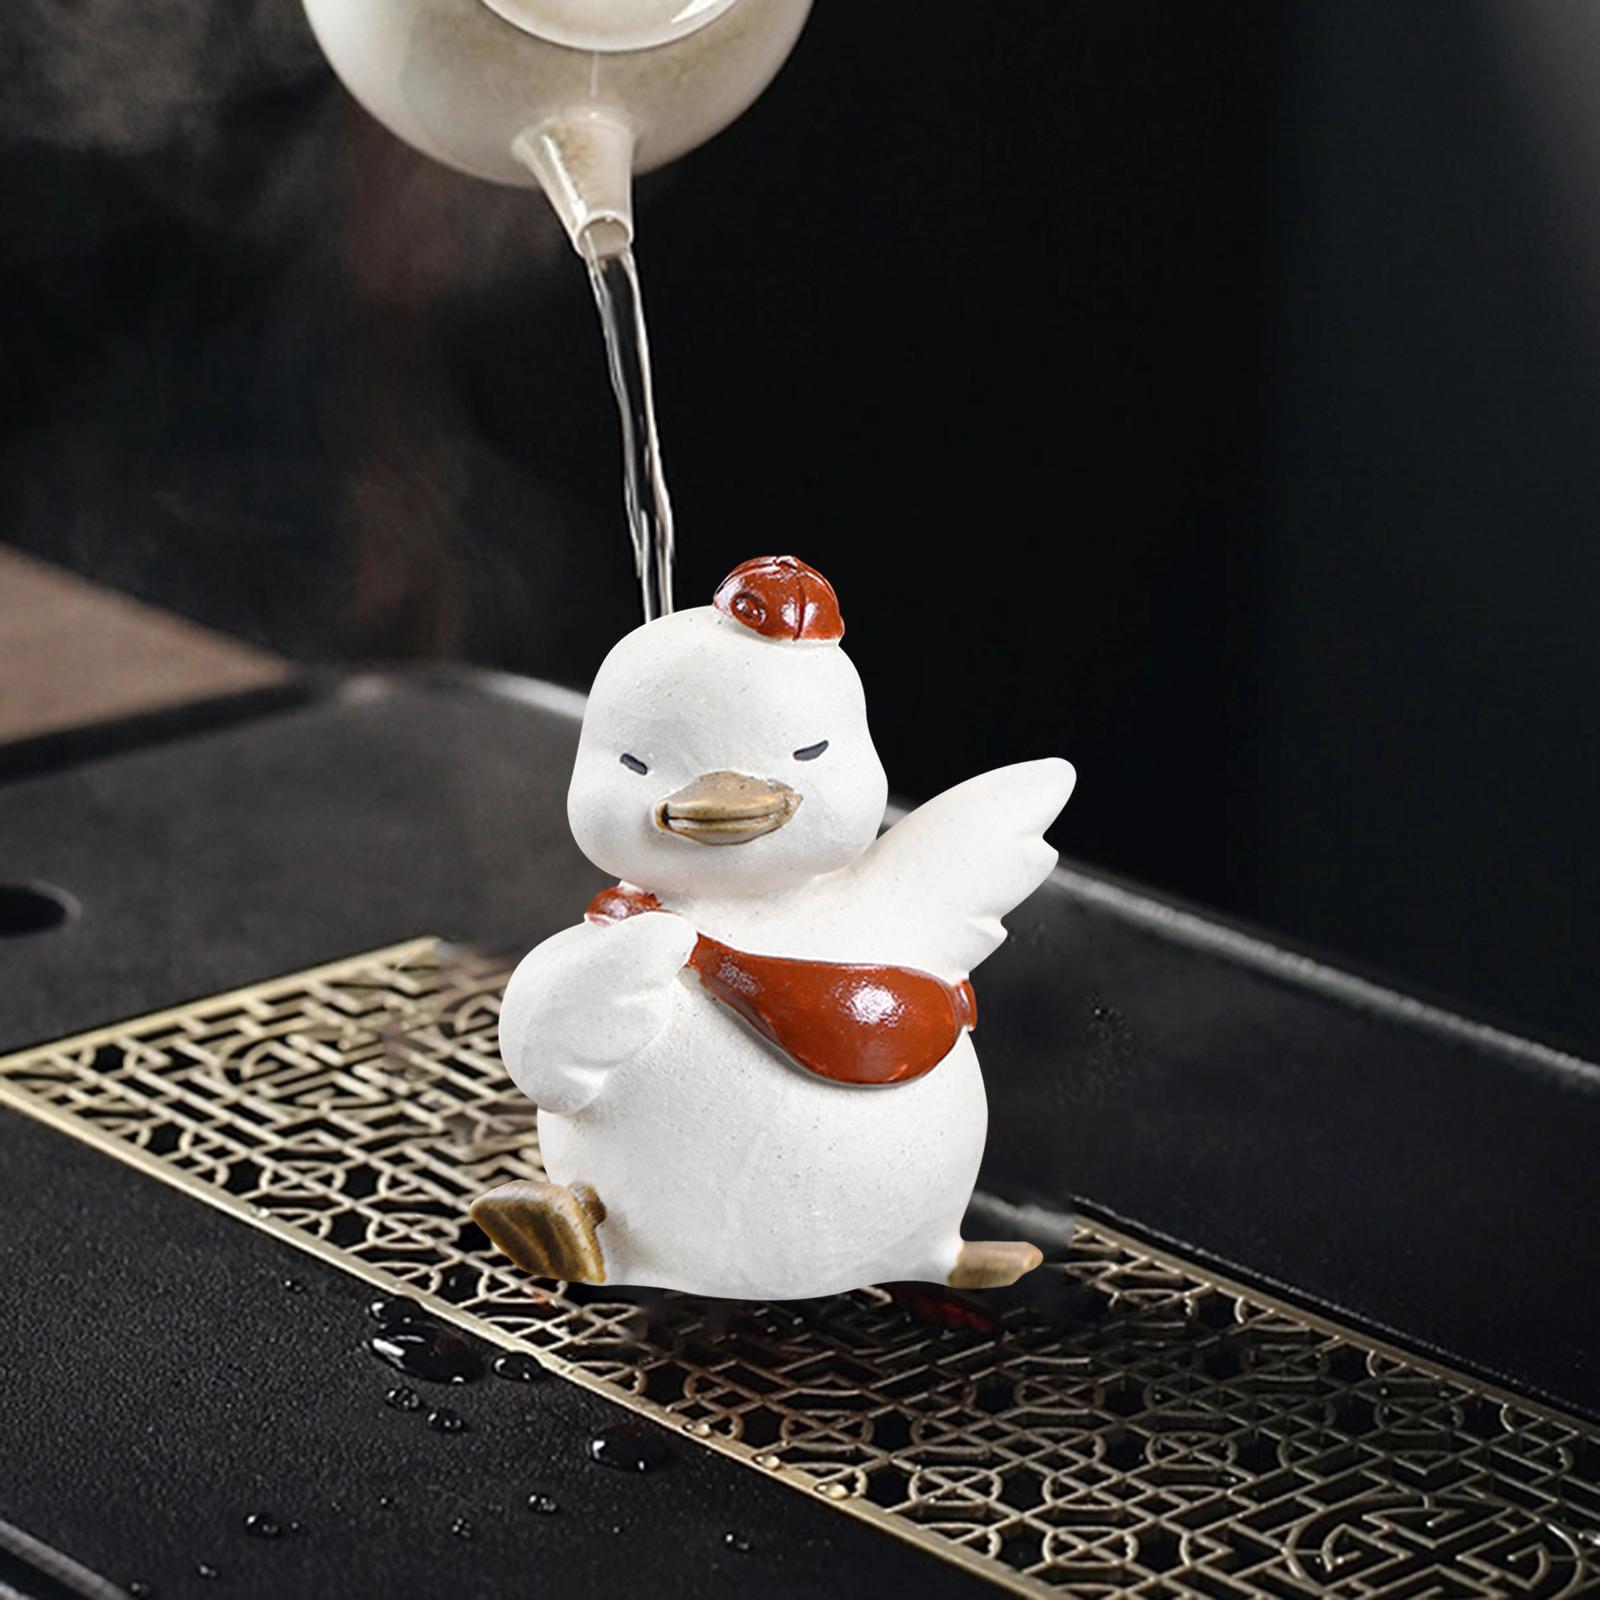 Duck Figurine Collectible Decorative Duck Statue for Tea Room Bedroom Office